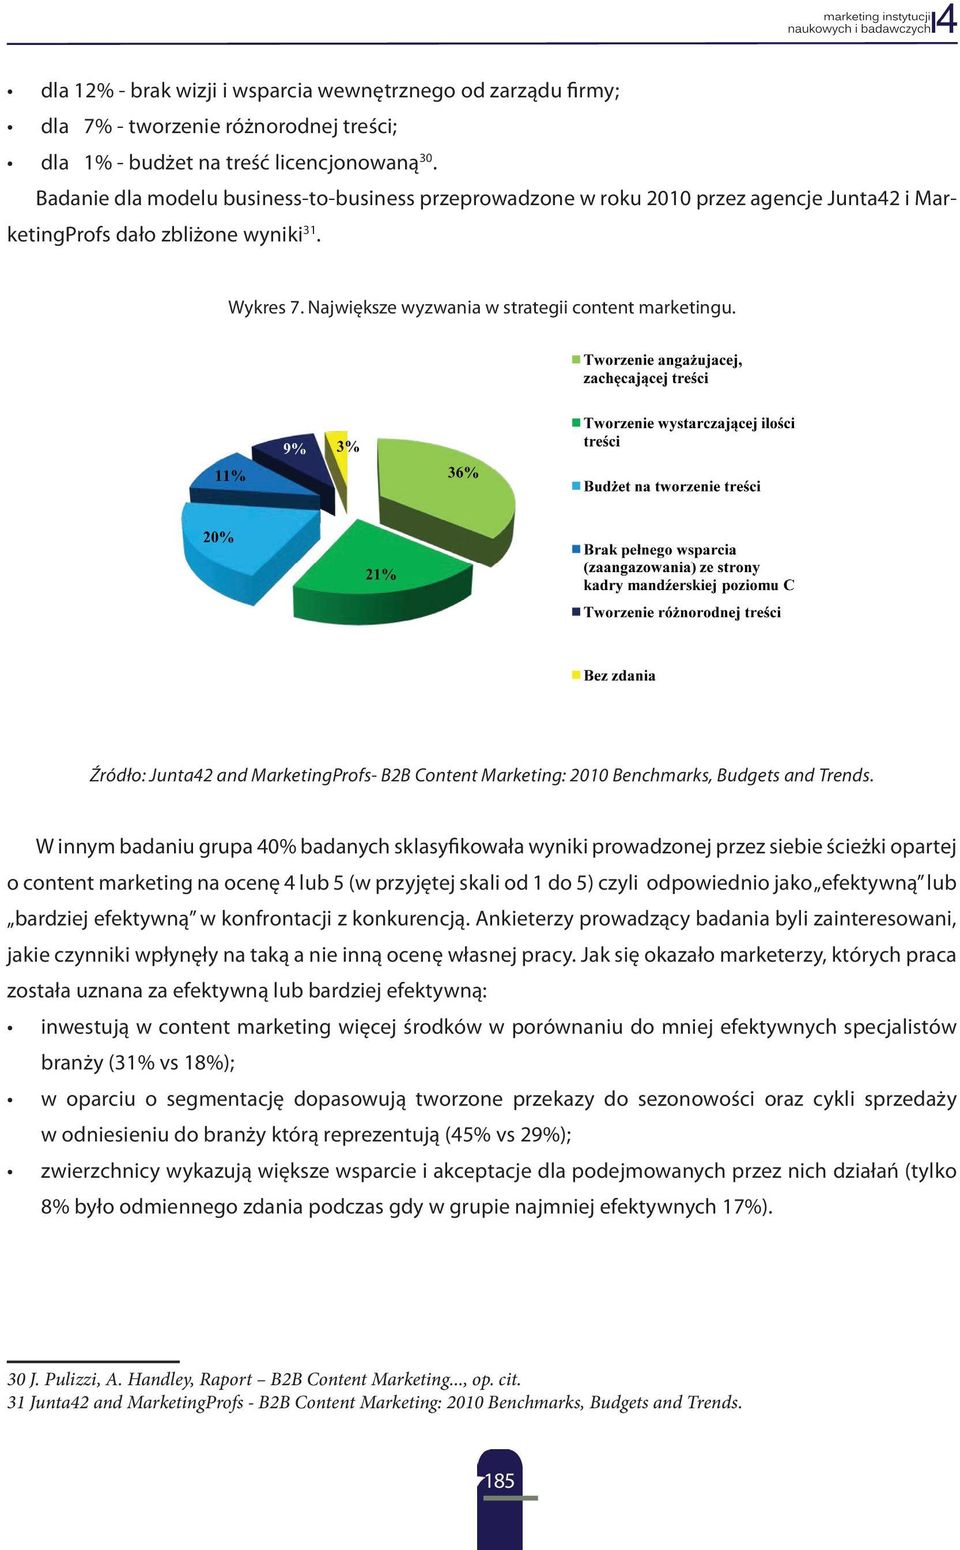 Źródło: Junta42 and MarketingProfs- B2B Content Marketing: 2010 Benchmarks, Budgets and Trends.